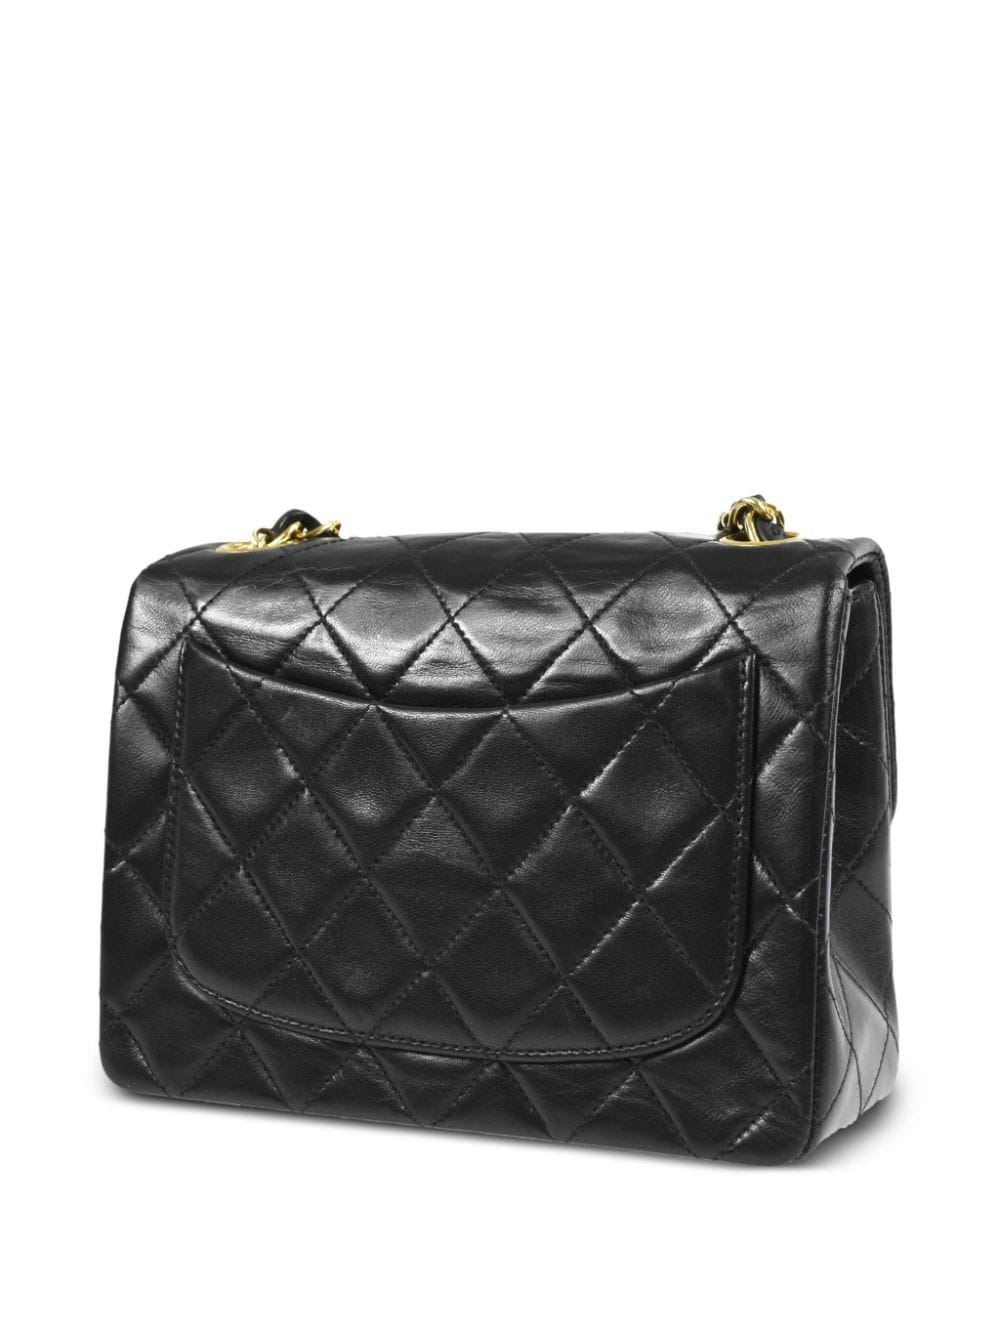 Chanel Pre Owned 1992 Classic Flap shoulder bag - ShopStyle